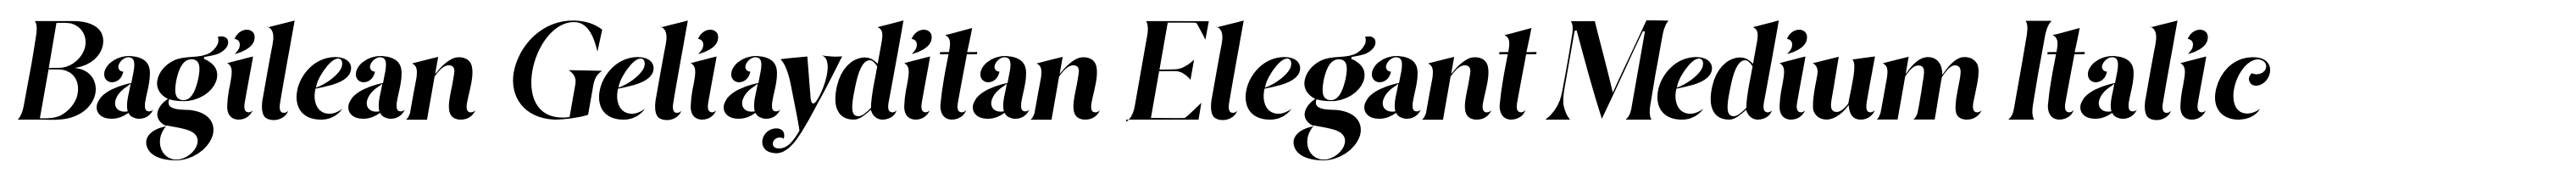 Bagilean Geliayditan Elegant Medium Italic